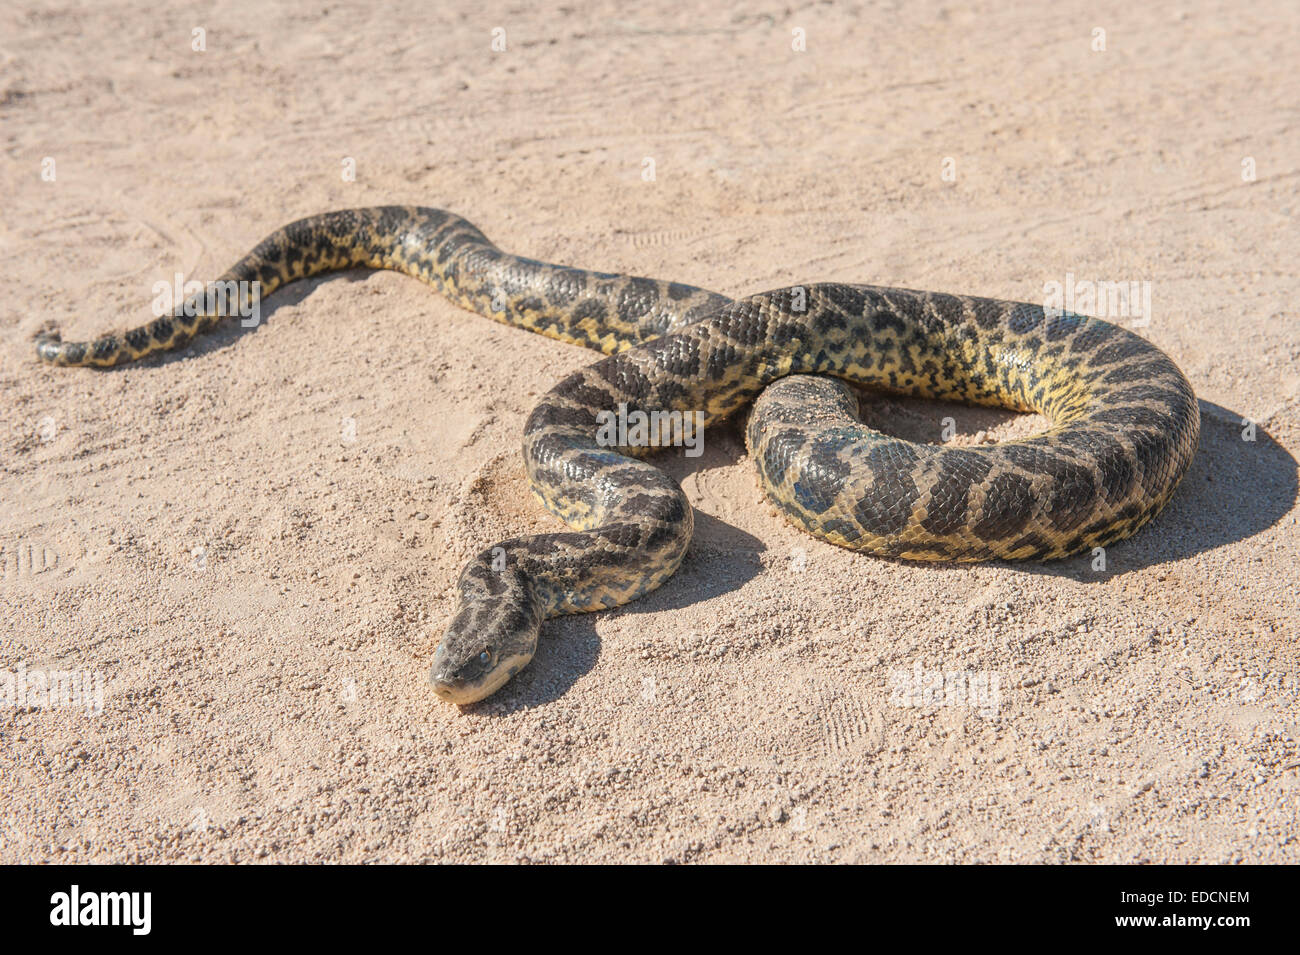 Closeup of desert rock python snake crawling on sandy arid ground Stock Photo